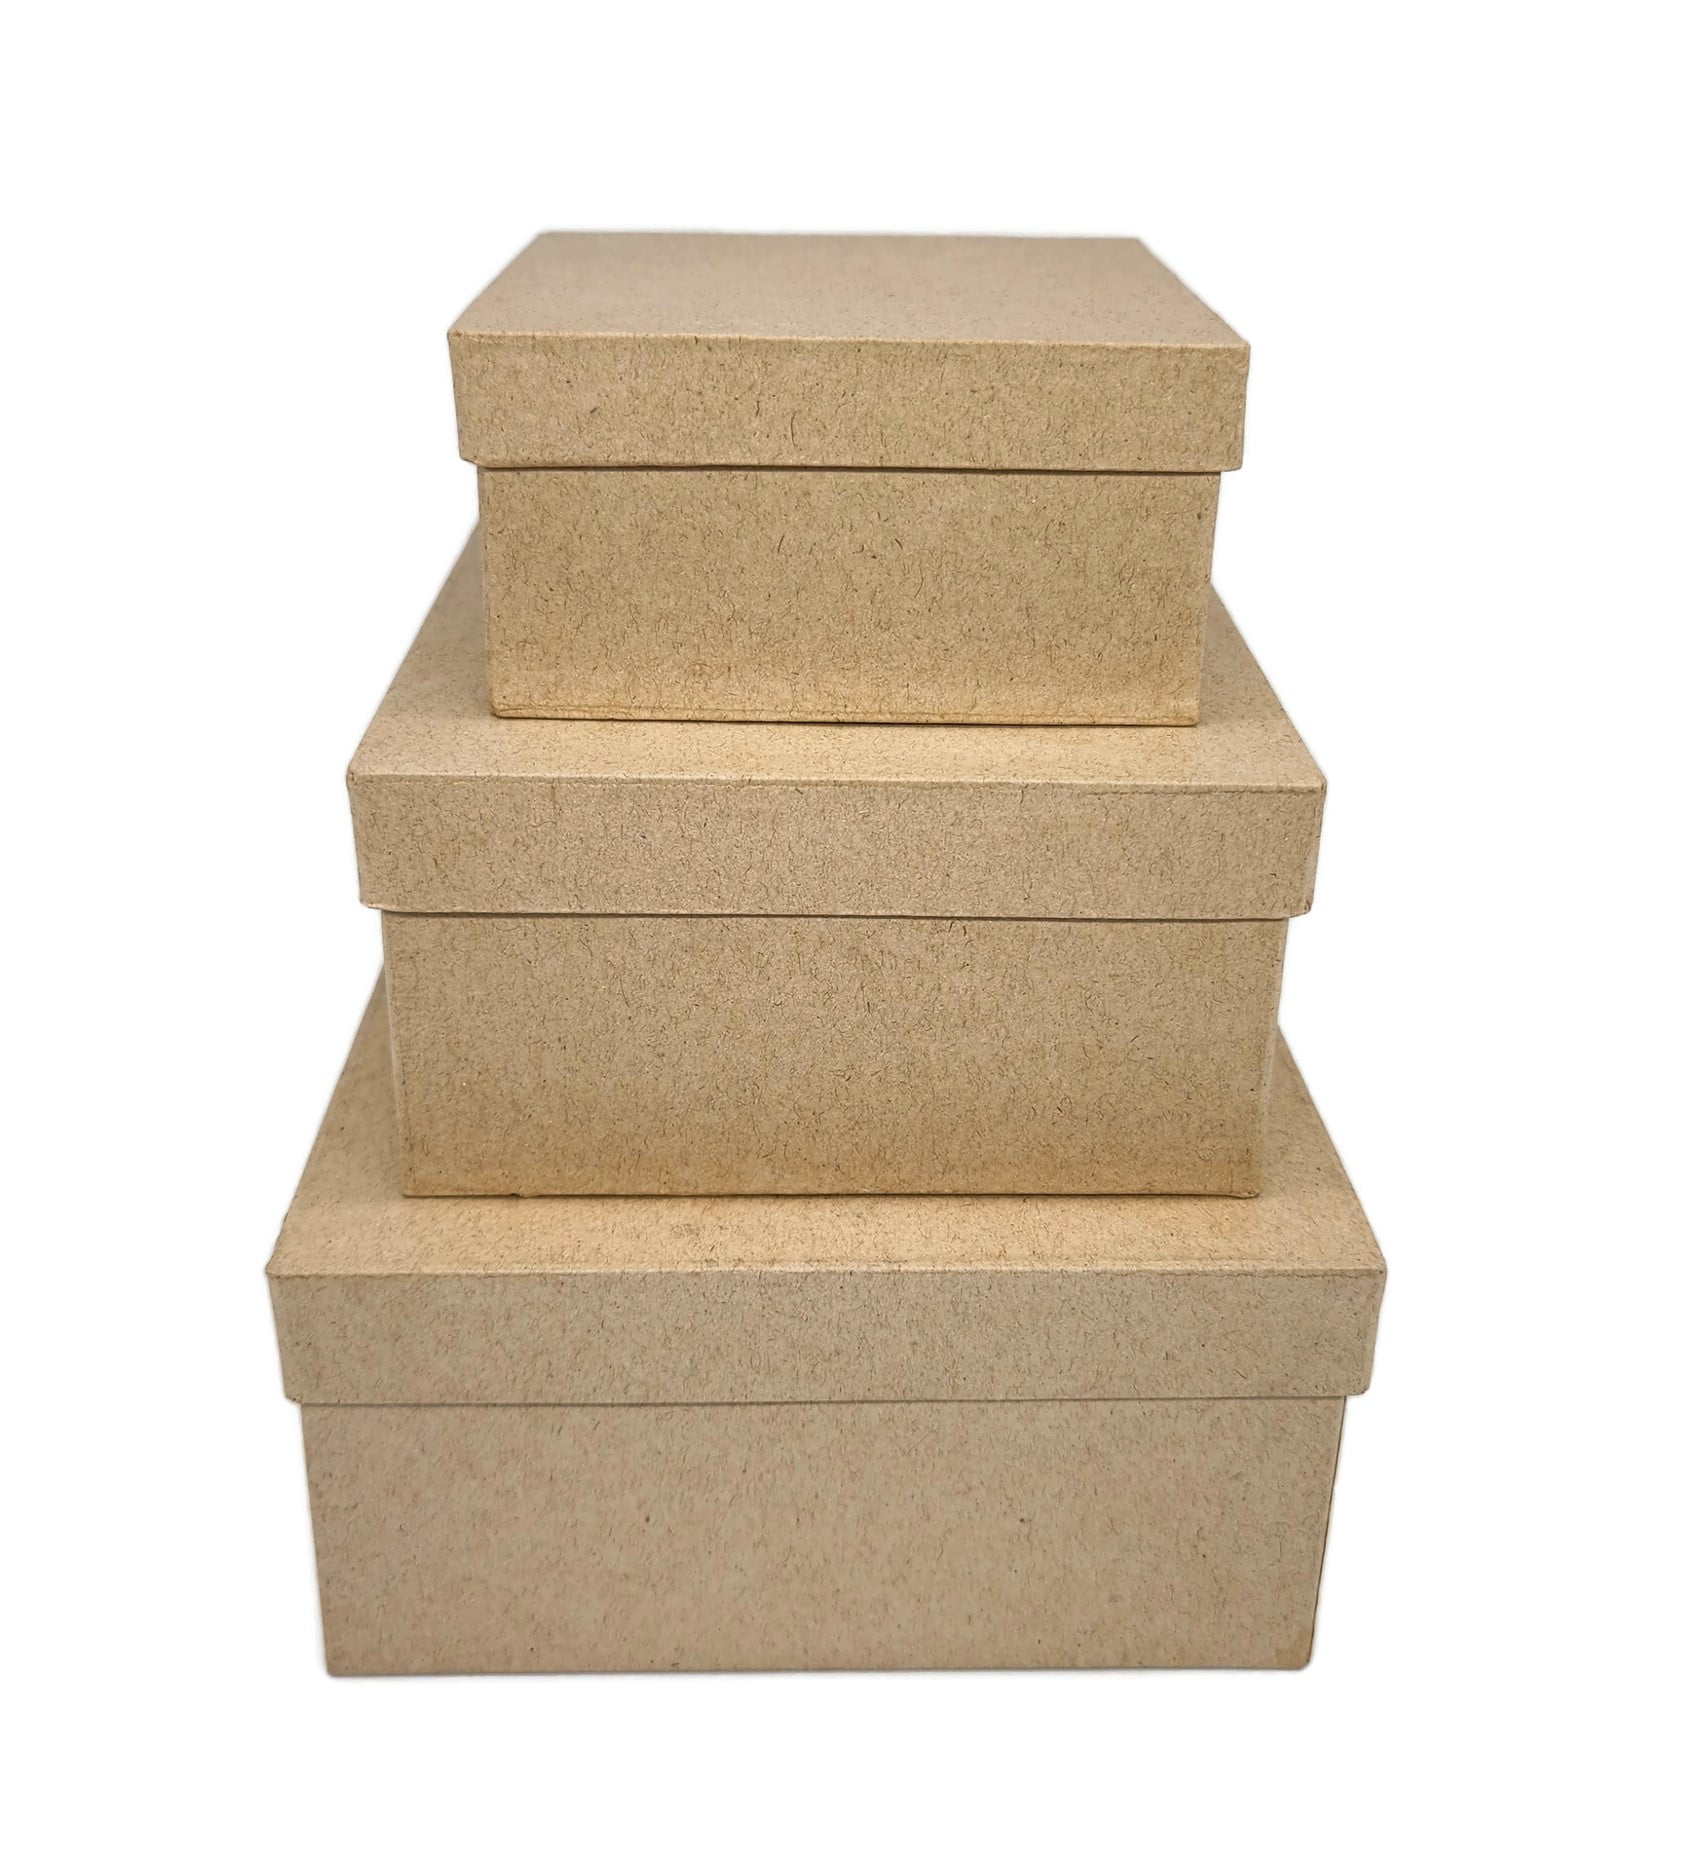 AllStellar Square Paper Mache Nesting Boxes Small Set of 3 Paper